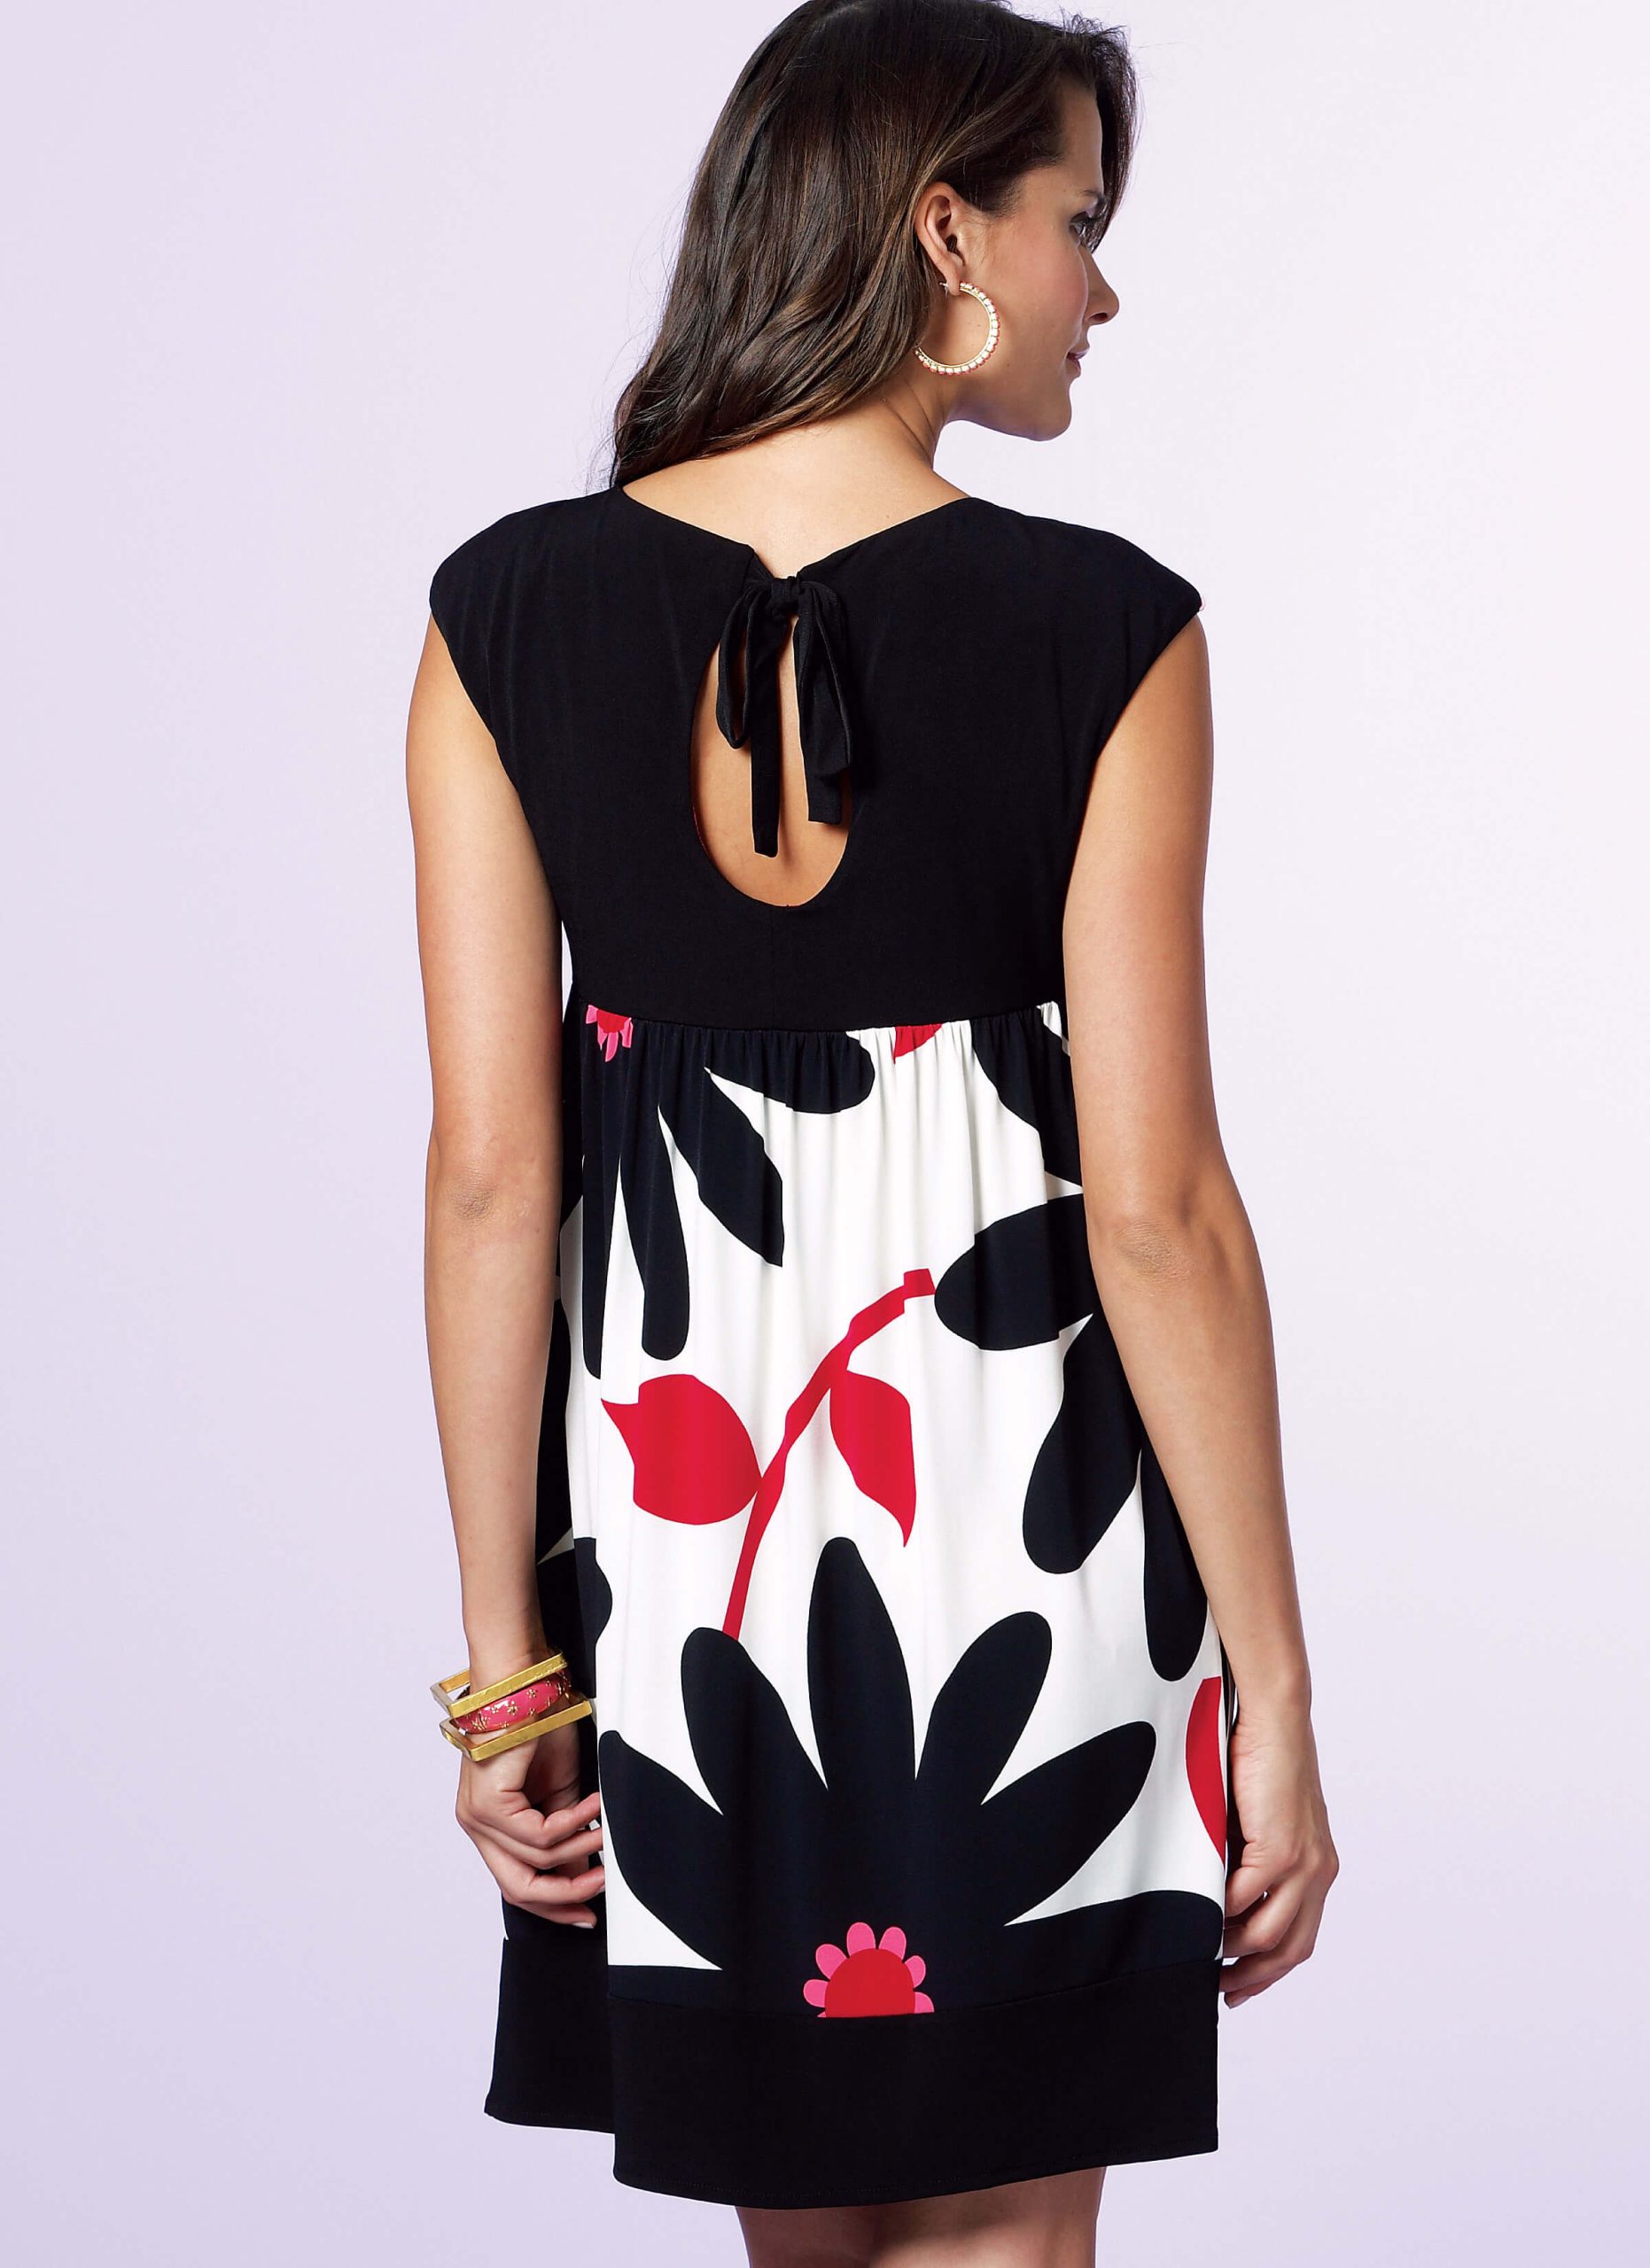 Butterick Sewing Pattern B5456 Misses'/Misses' Petite Dress